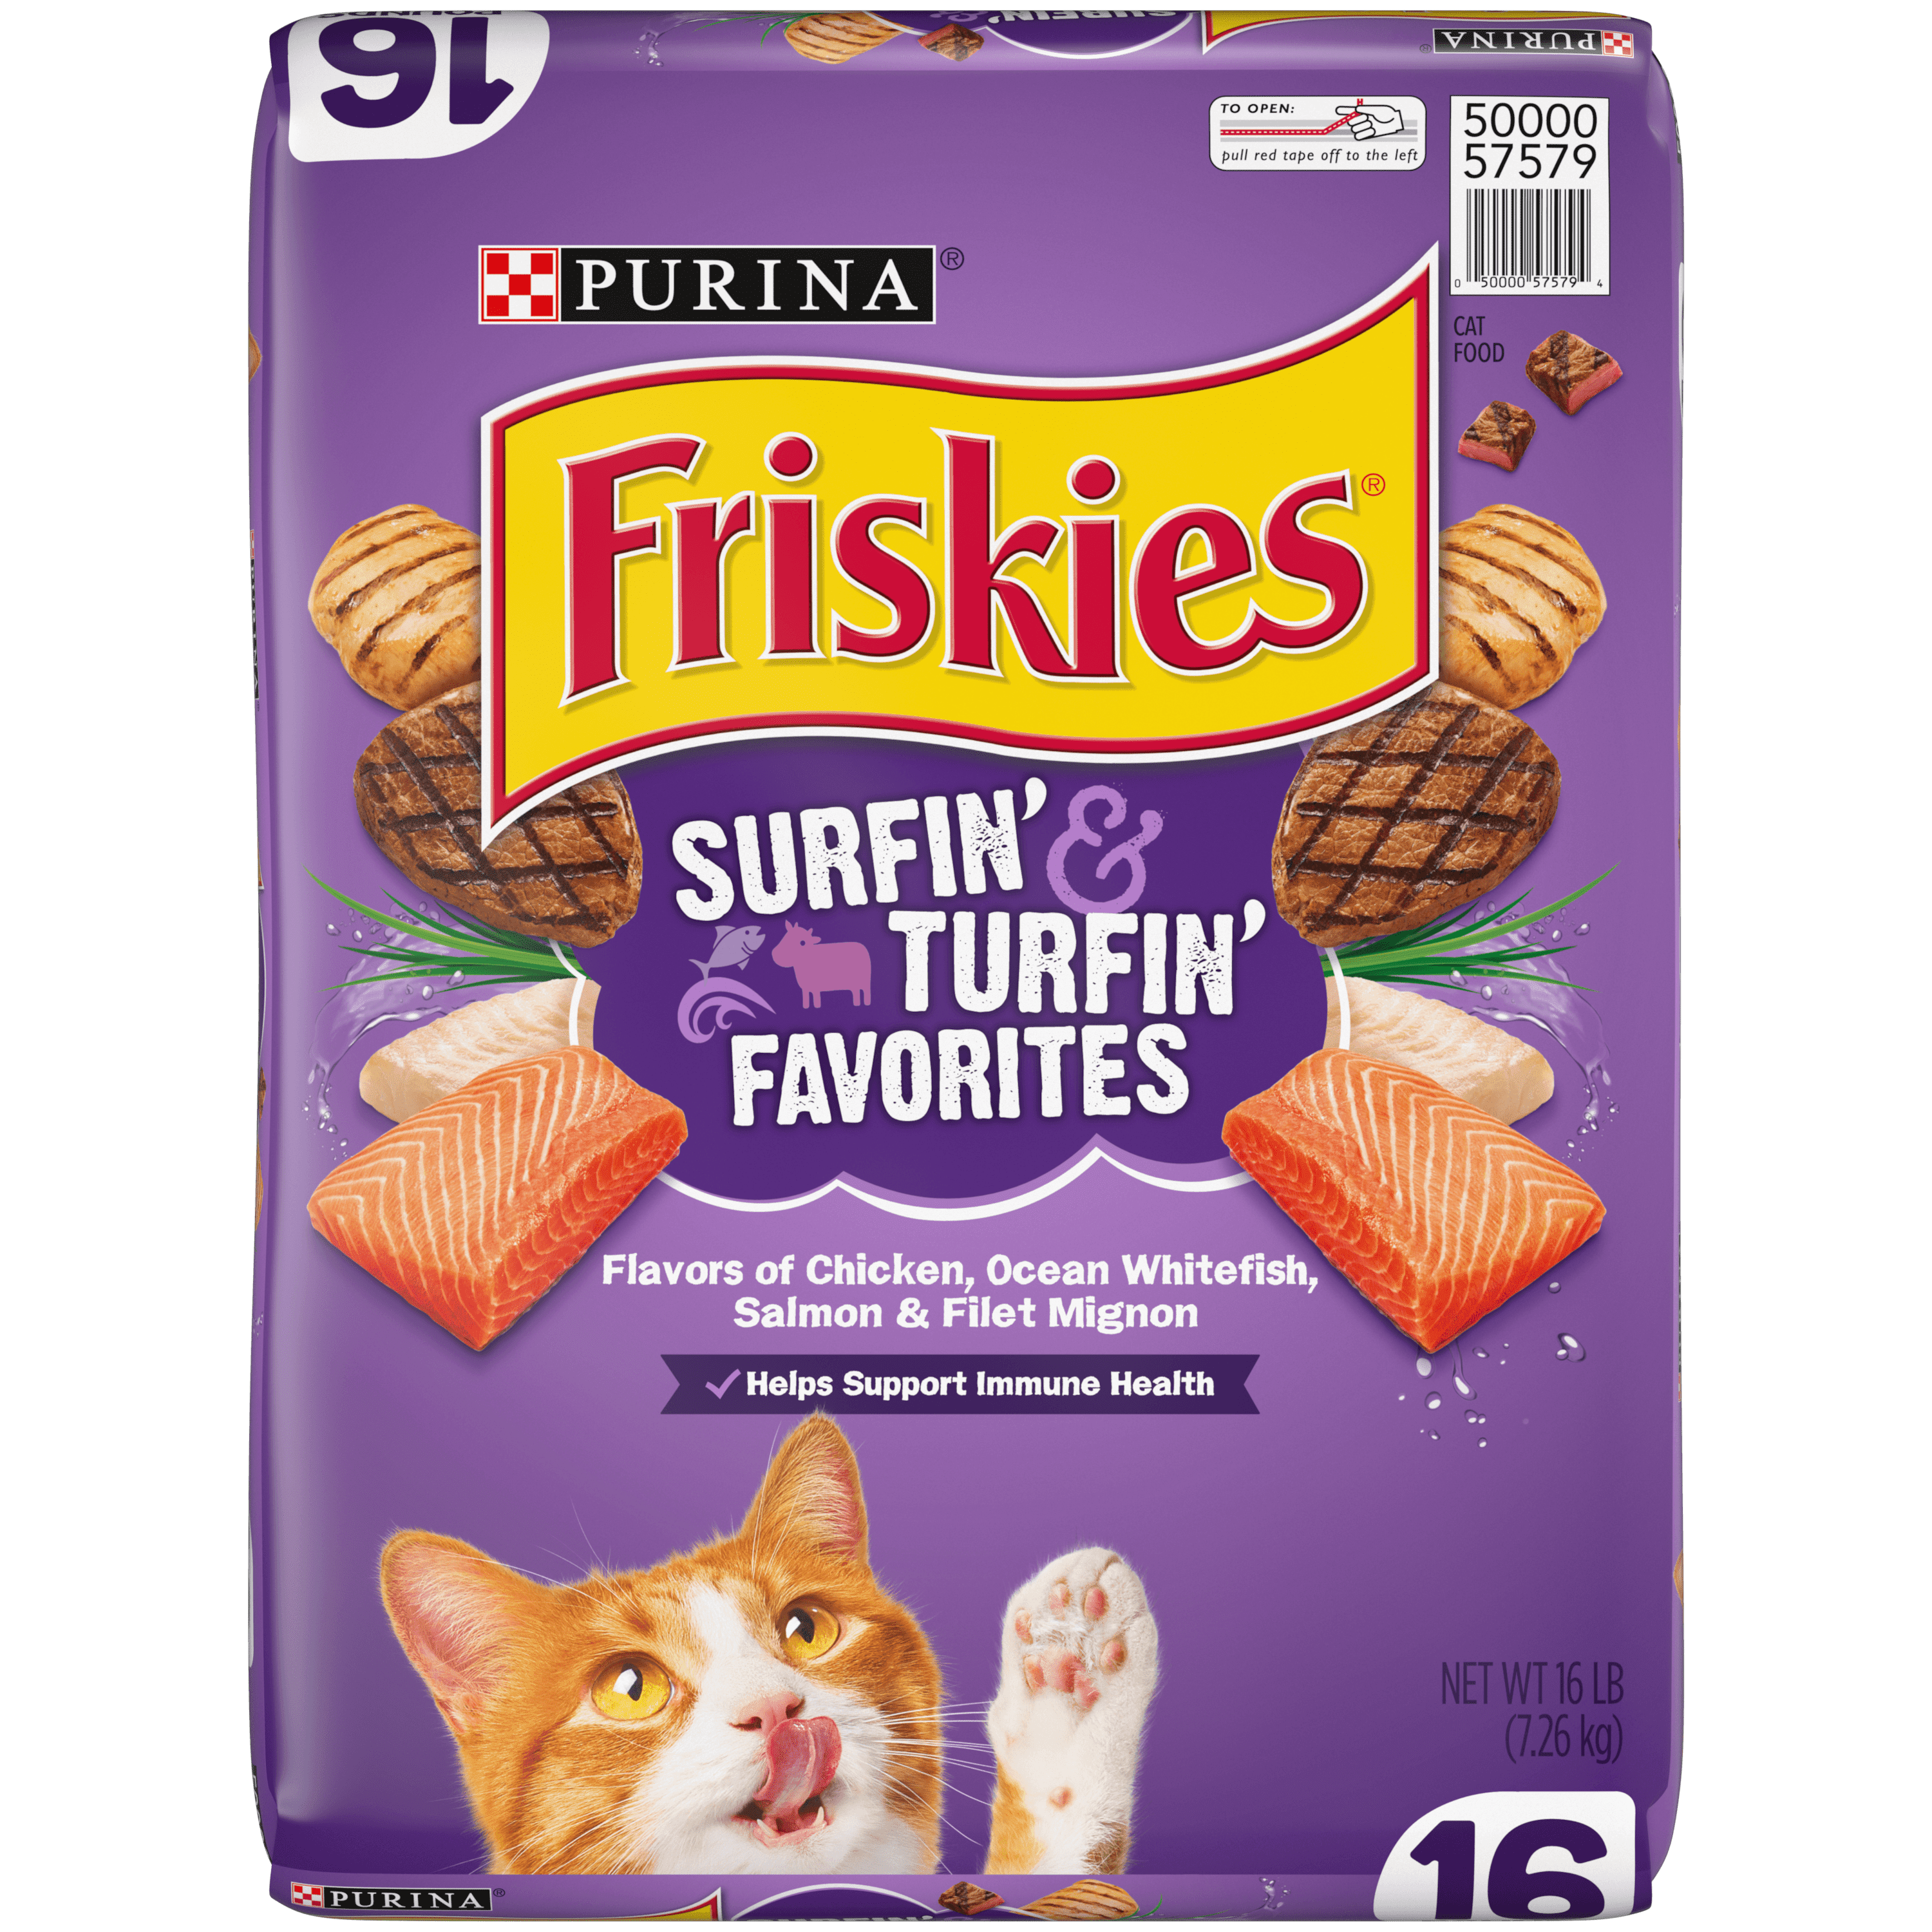 Friskies Dry Cat Food, Surfin' & Turfin' Favorites, 16 lb. Bag